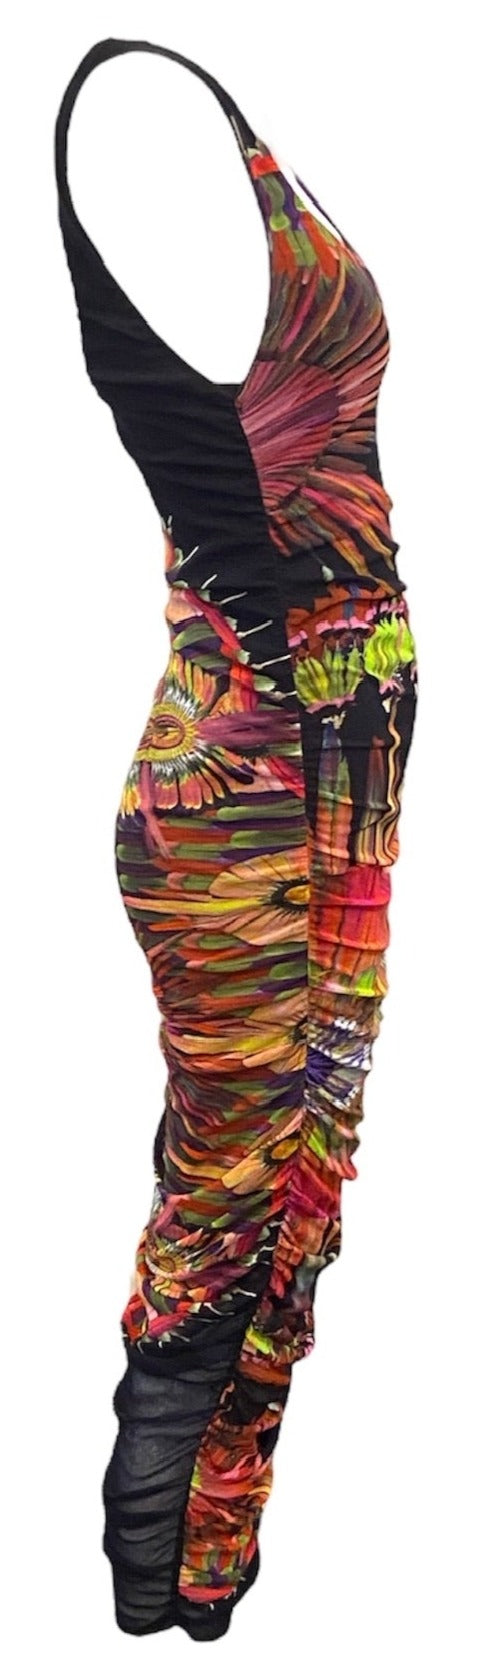 Jean Paul Gaultier Soleil 2000s Body Con Floral Mesh Dress SIDE 2 of 5